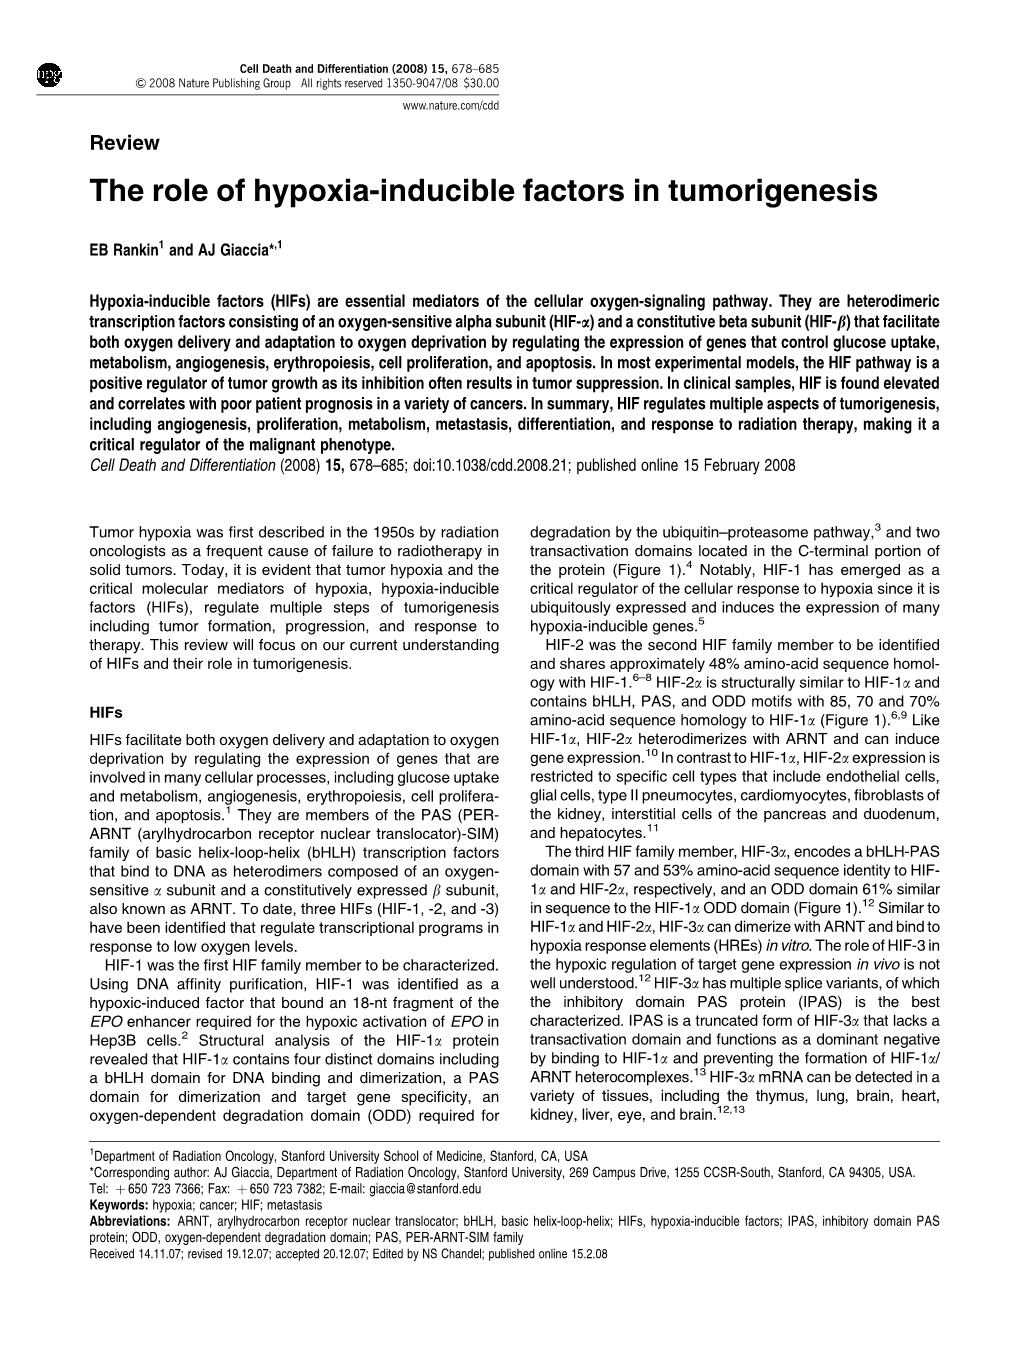 The Role of Hypoxia-Inducible Factors in Tumorigenesis